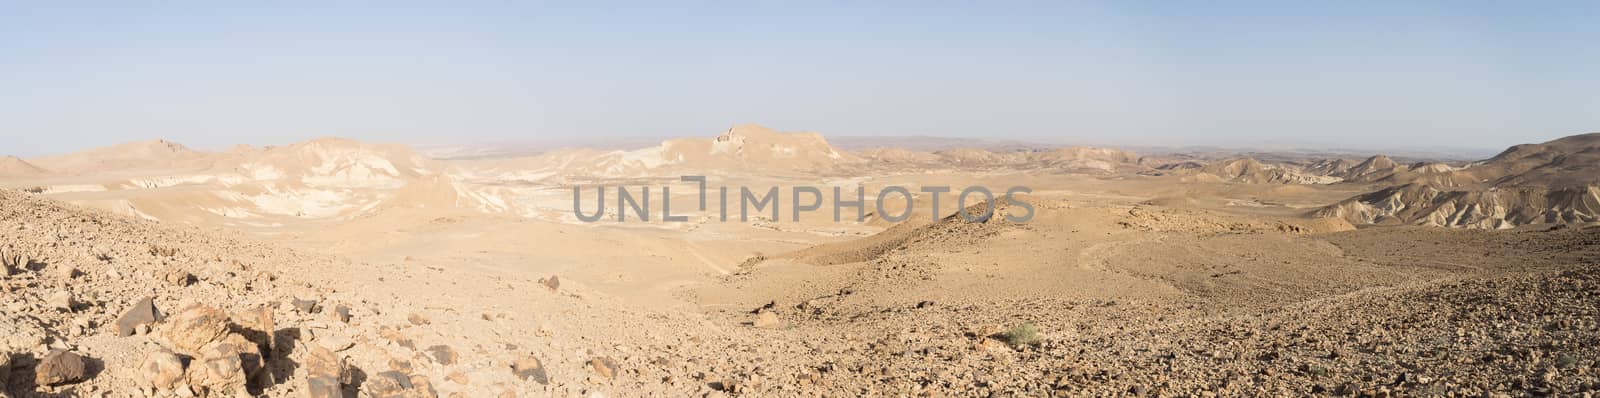 Hiking in stone desert active tourist activity